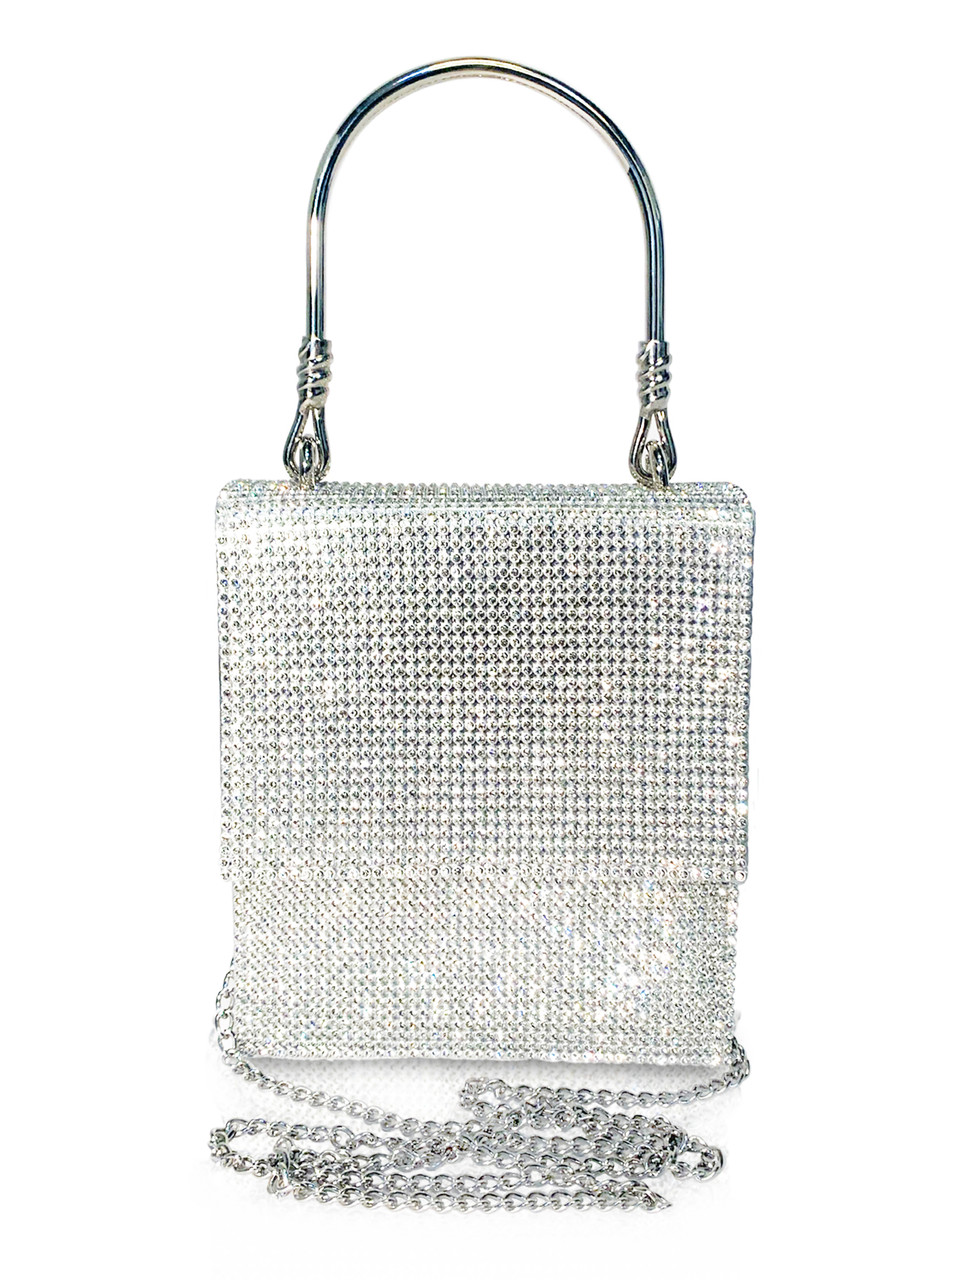 Small evening bag, Sequins & silver-tone metal, black & silver — Fashion